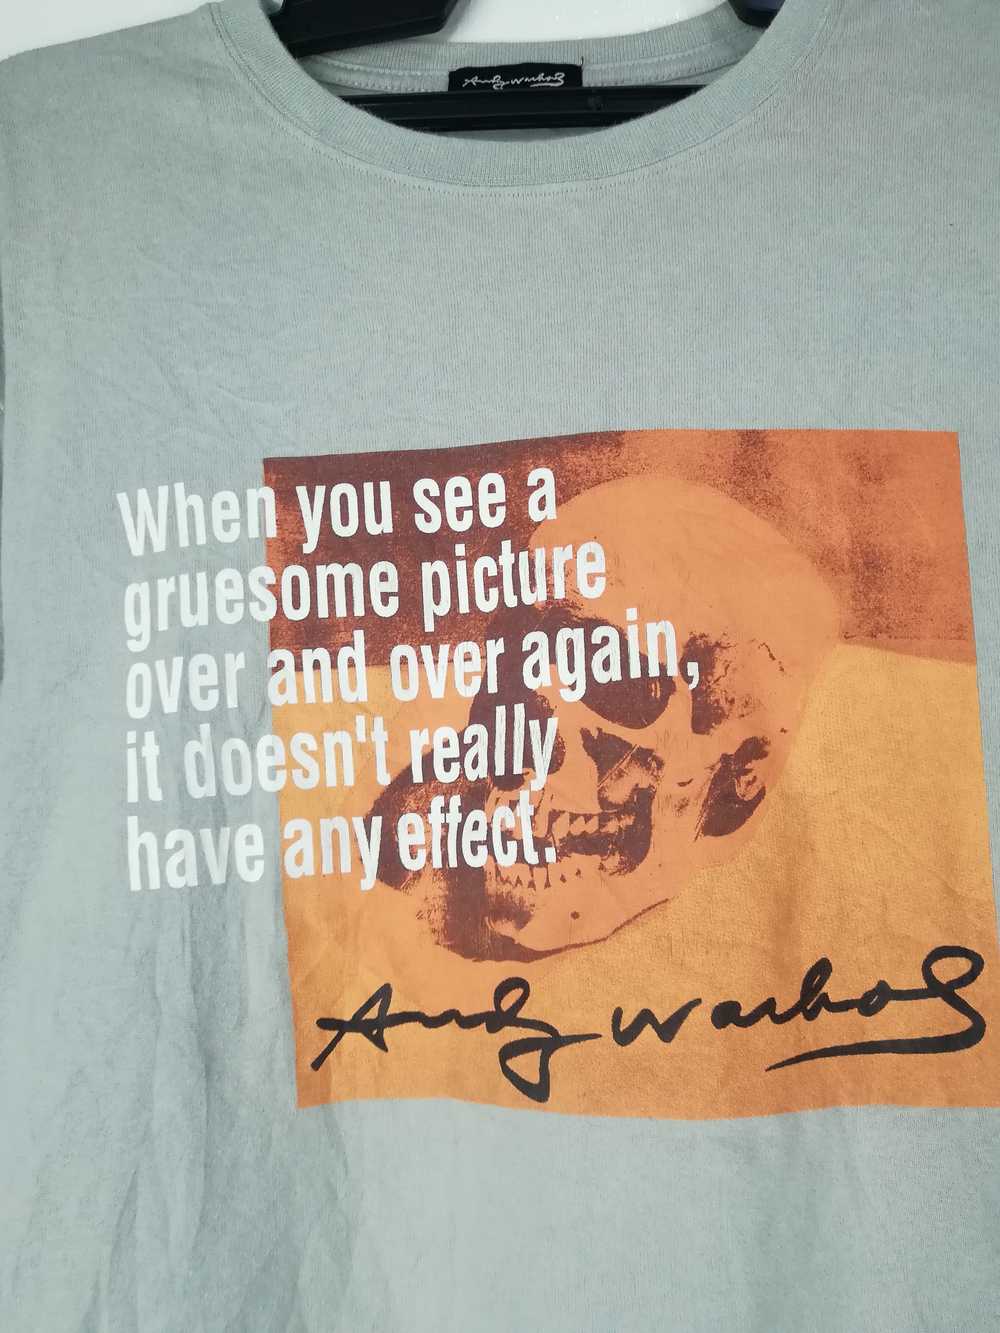 Andy Warhol - Andy Warhol - image 6